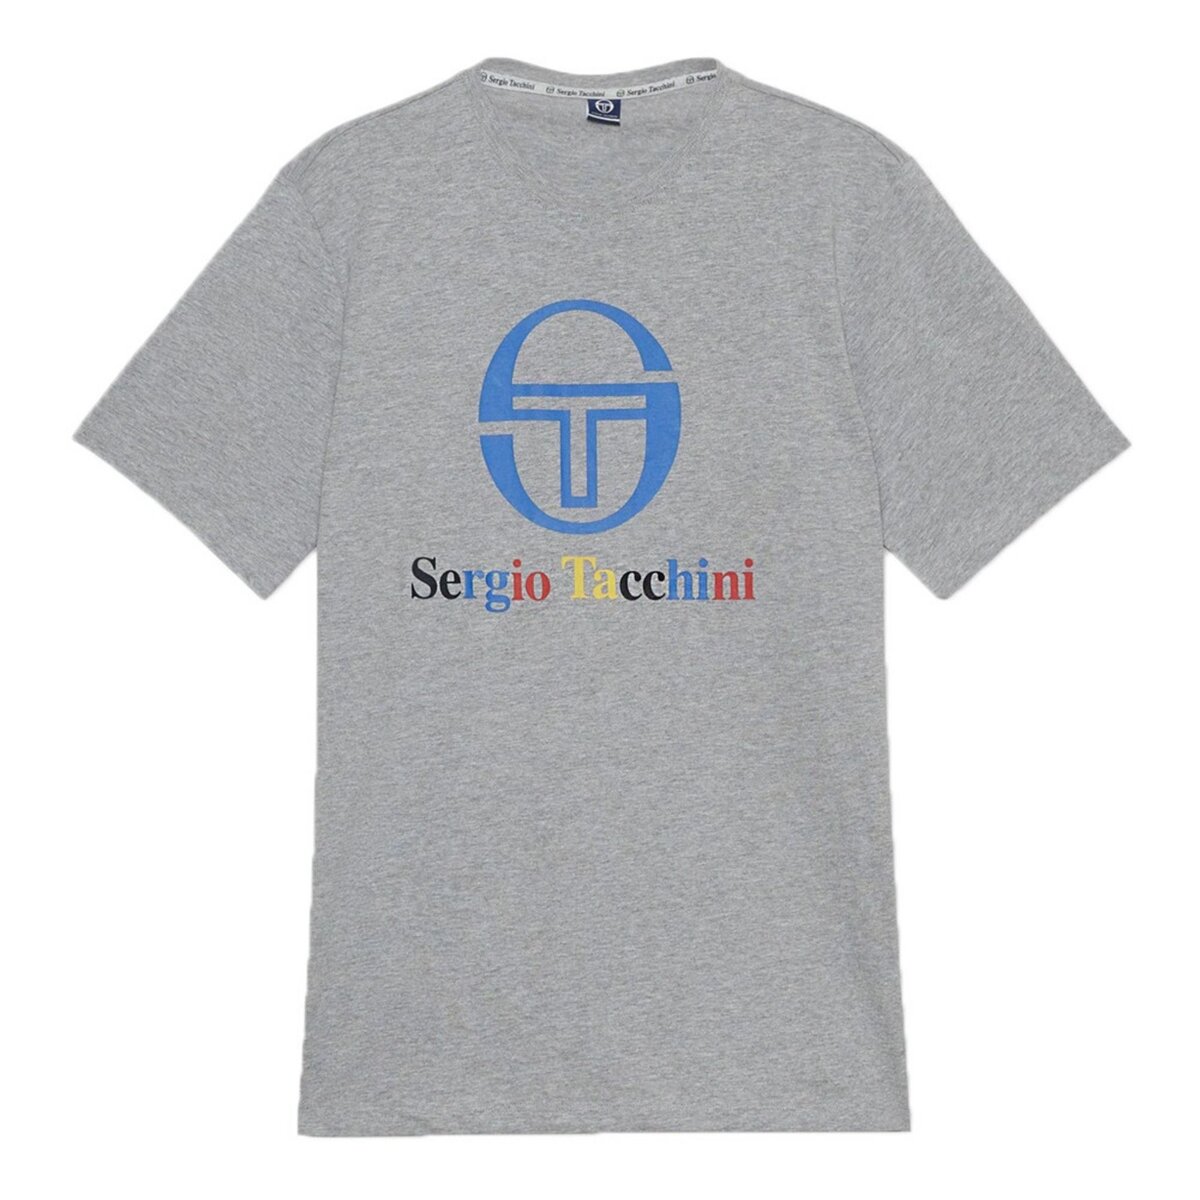 SERGIO TACCHINI T-shirt Gris Homme Sergio Tacchini Chiko